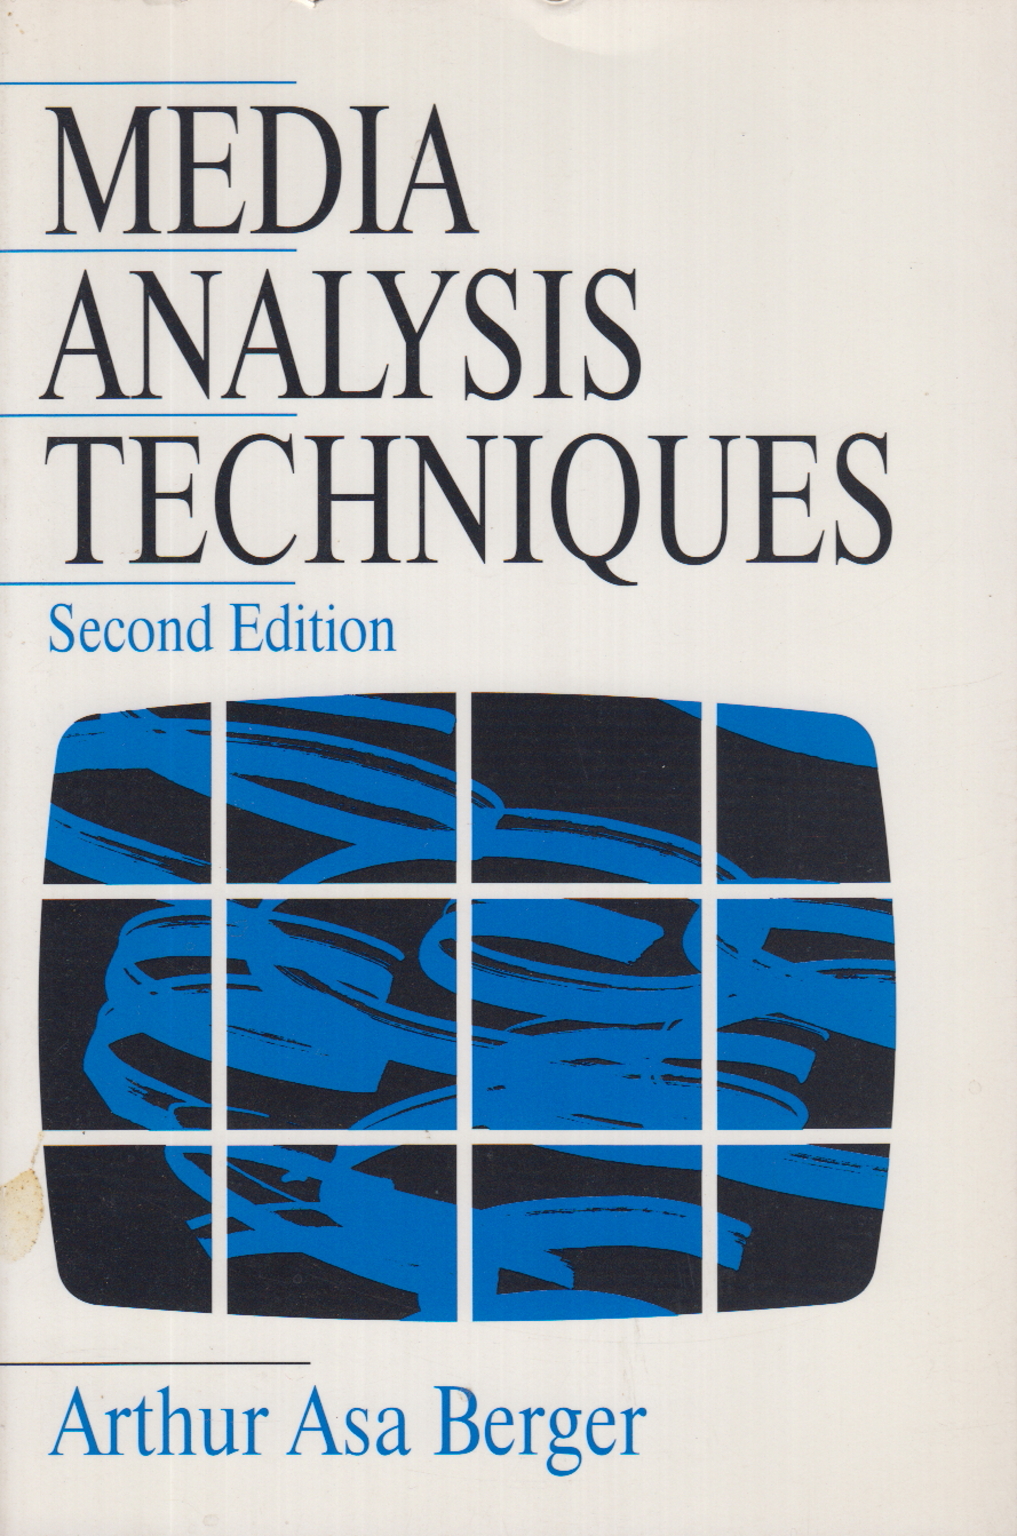 Media analysis techniques, Arthur Asa Berger